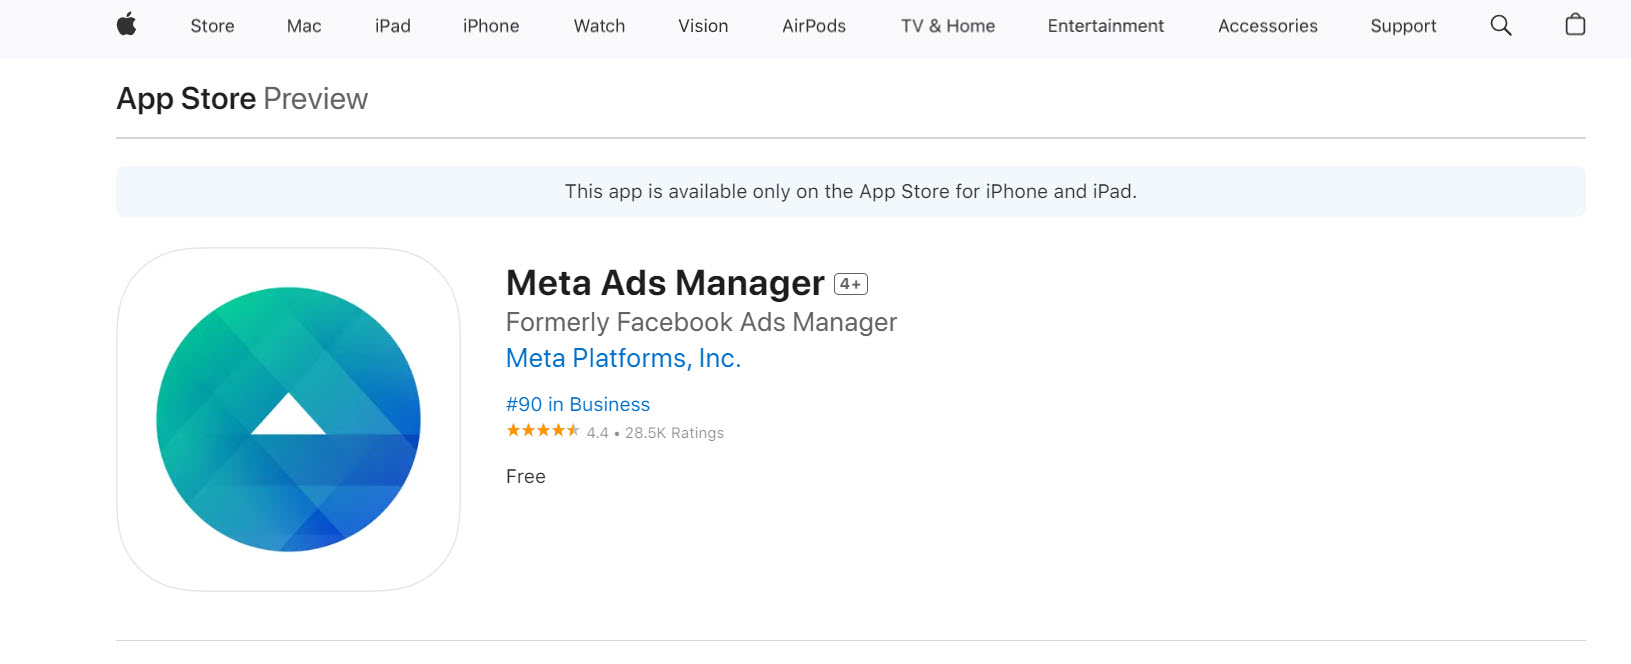 Meta Ads Manager